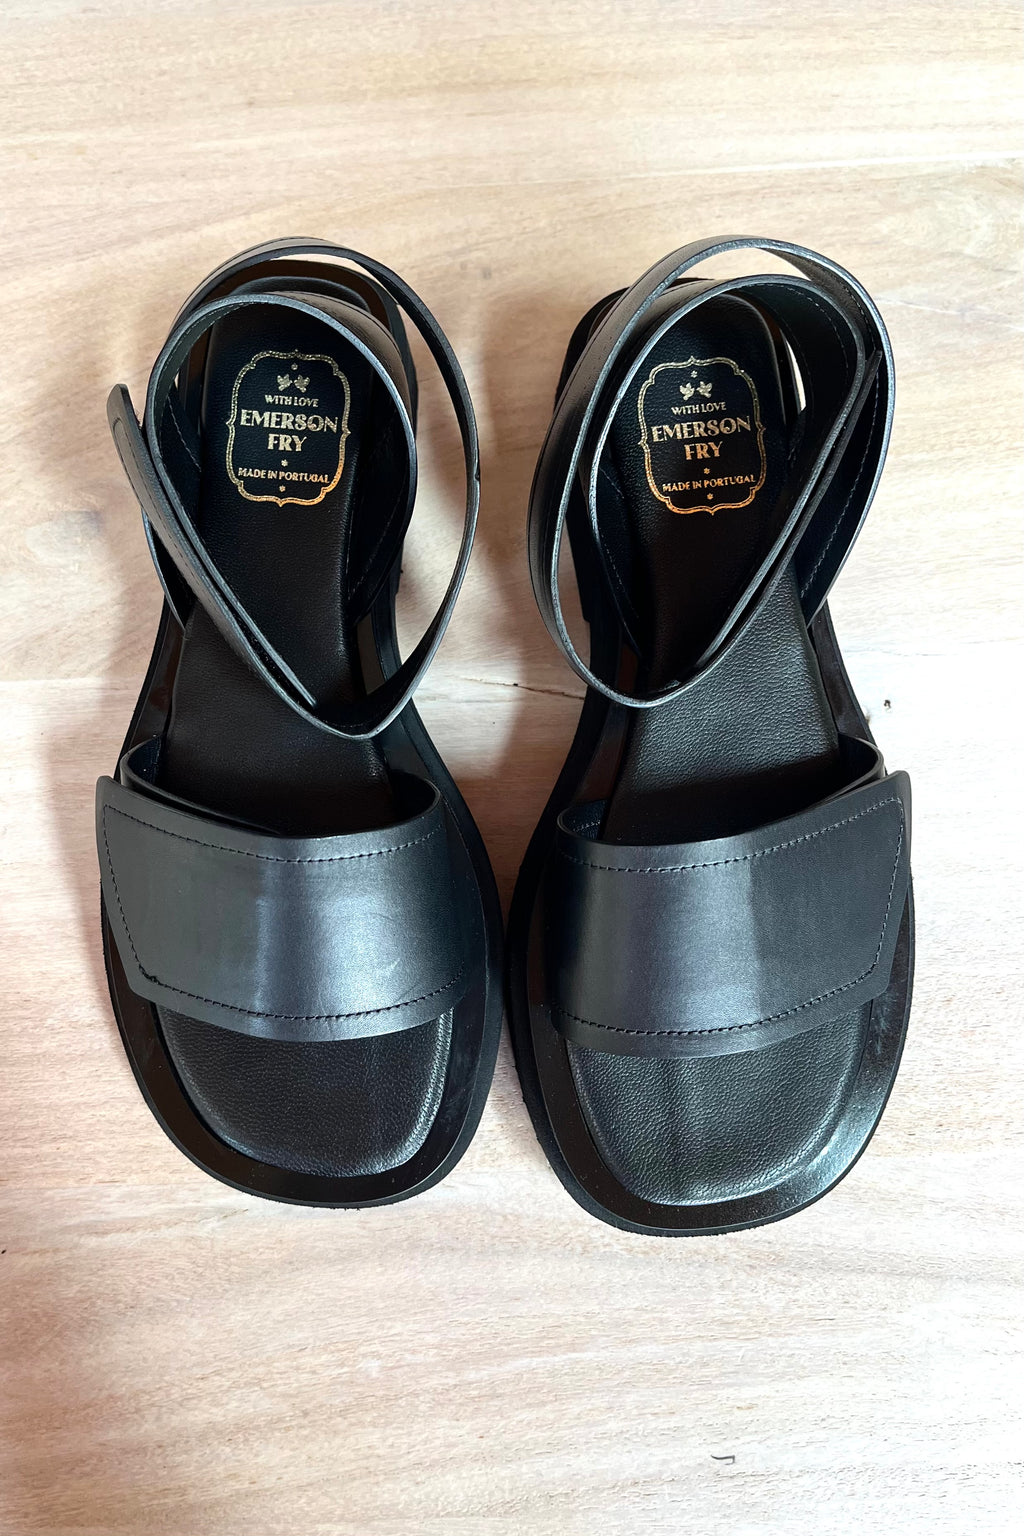 Cross Platform Sandal - Black Leather